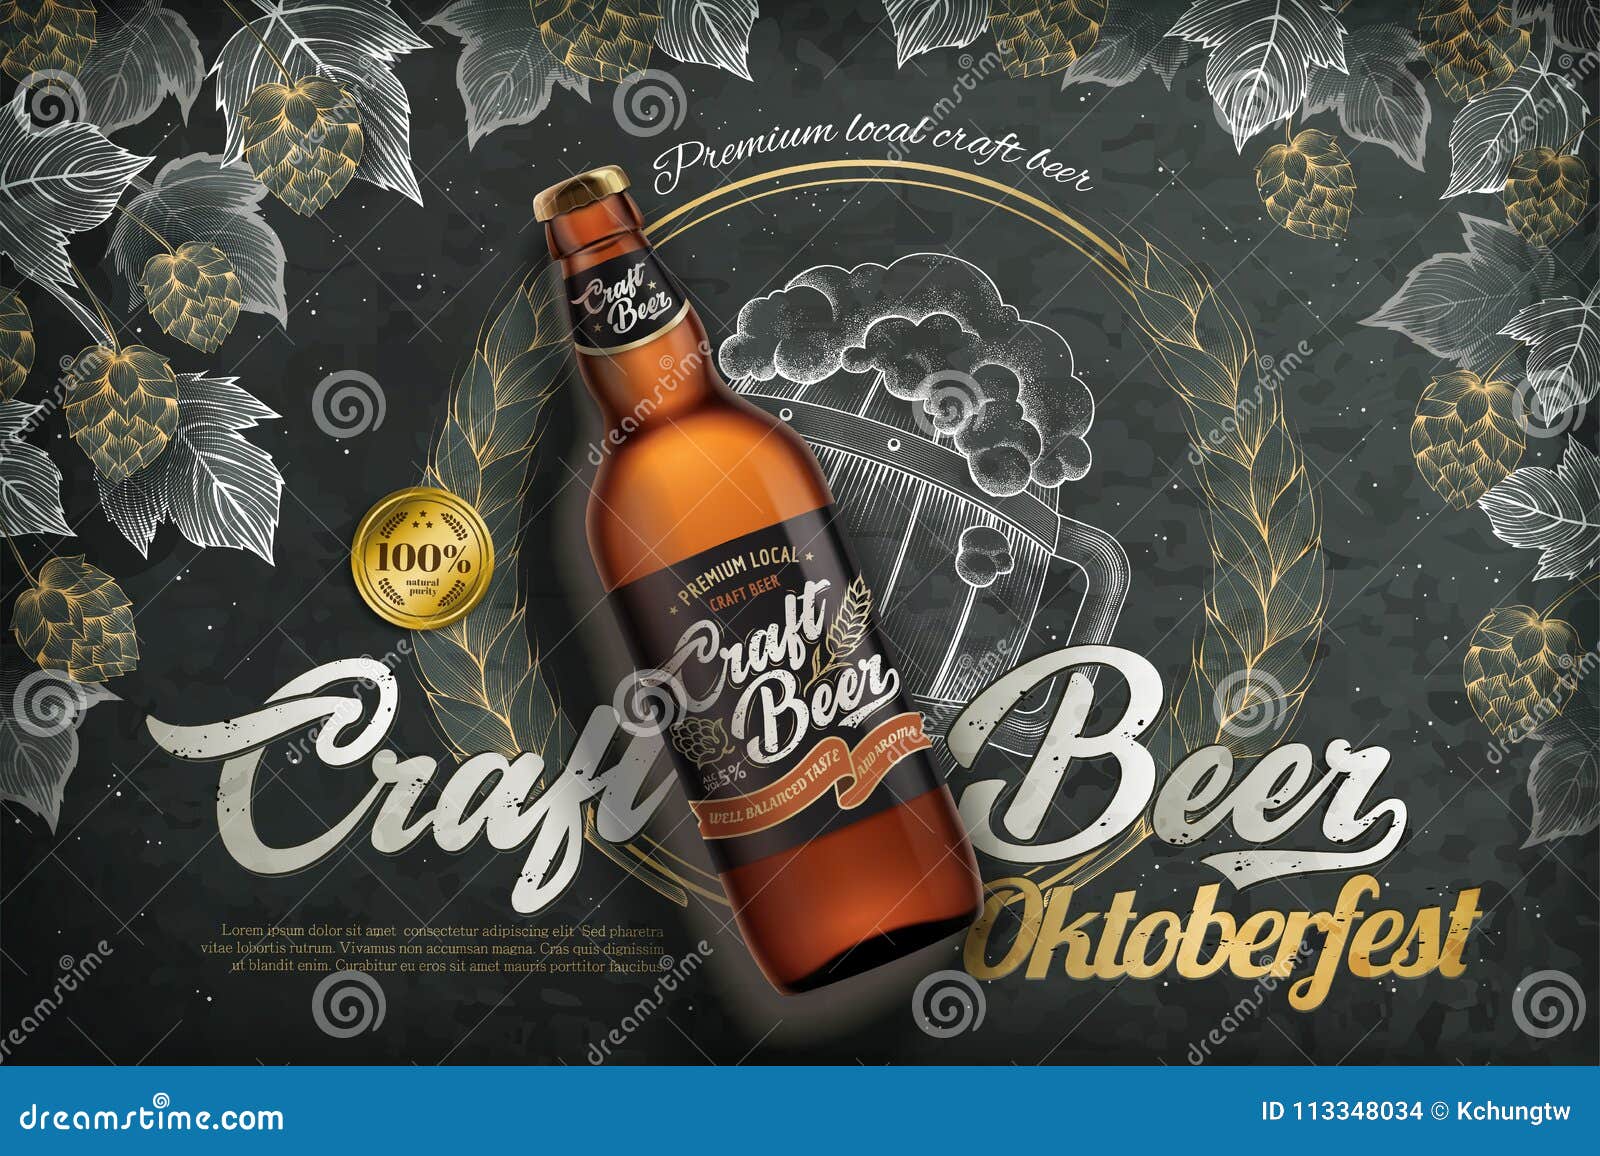 craft beer ads